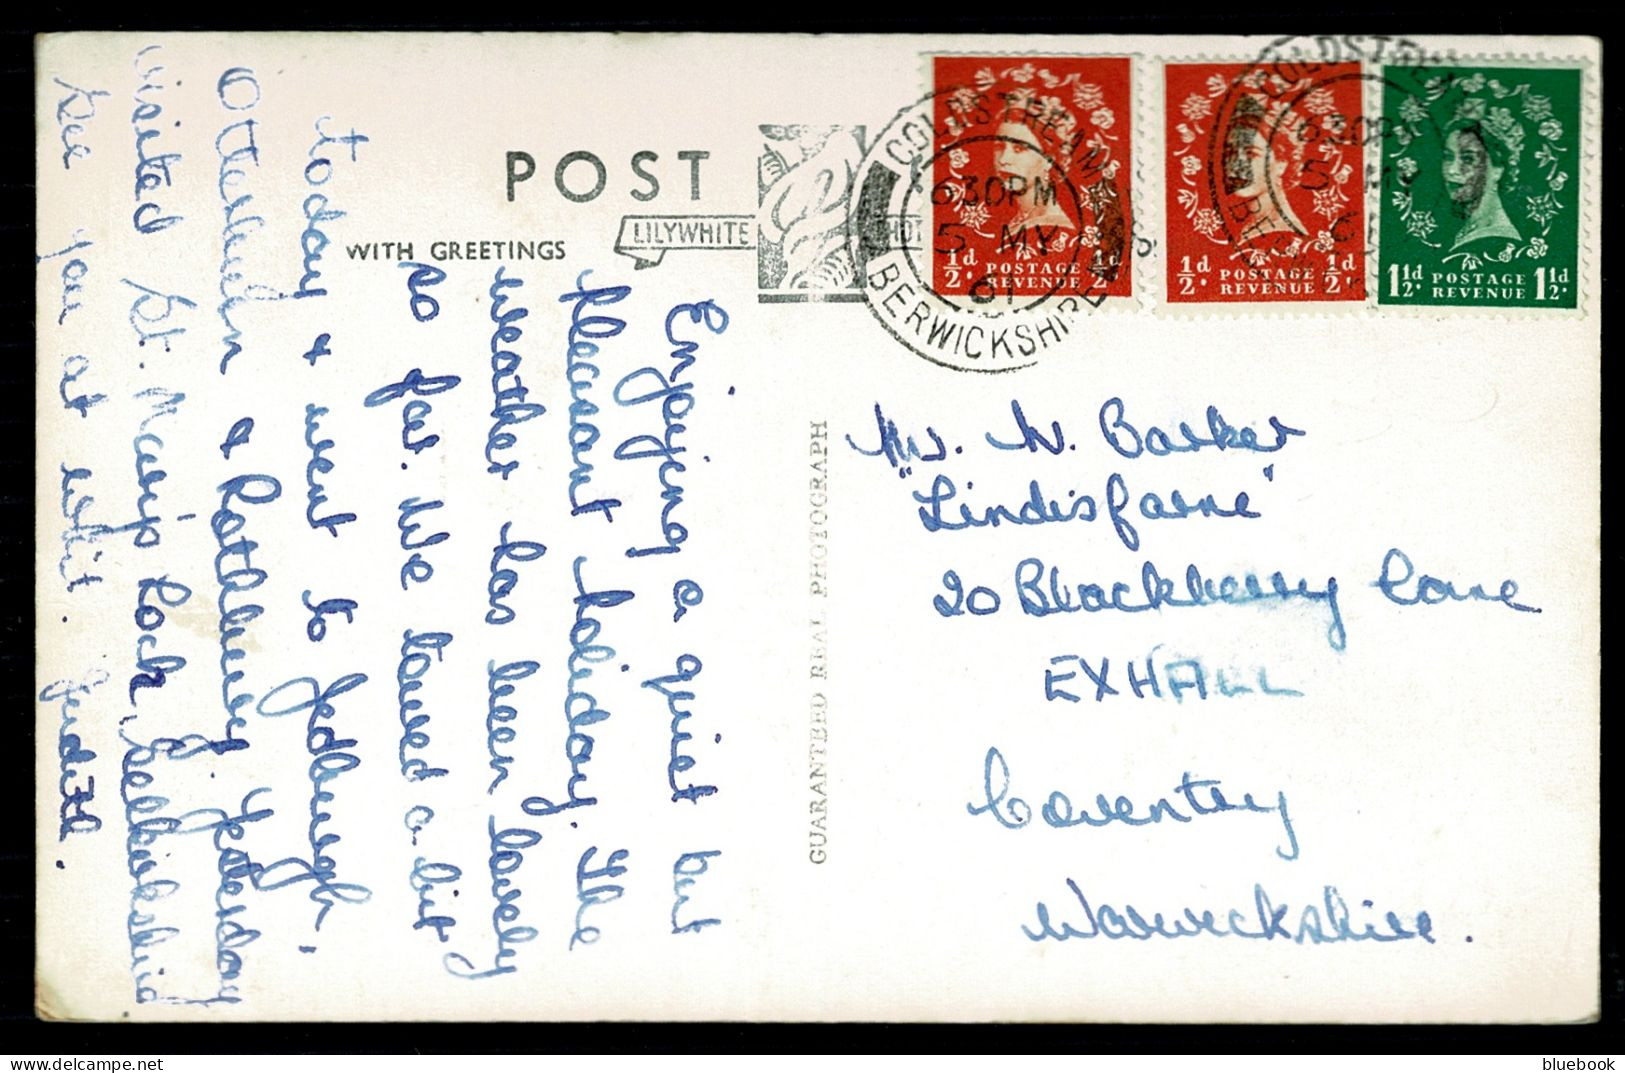 Ref 1624 - 1961 Real Photo Postcard Queen Mary's House Jedburgh Roxburgshire - Coldstream Cancel - Roxburghshire